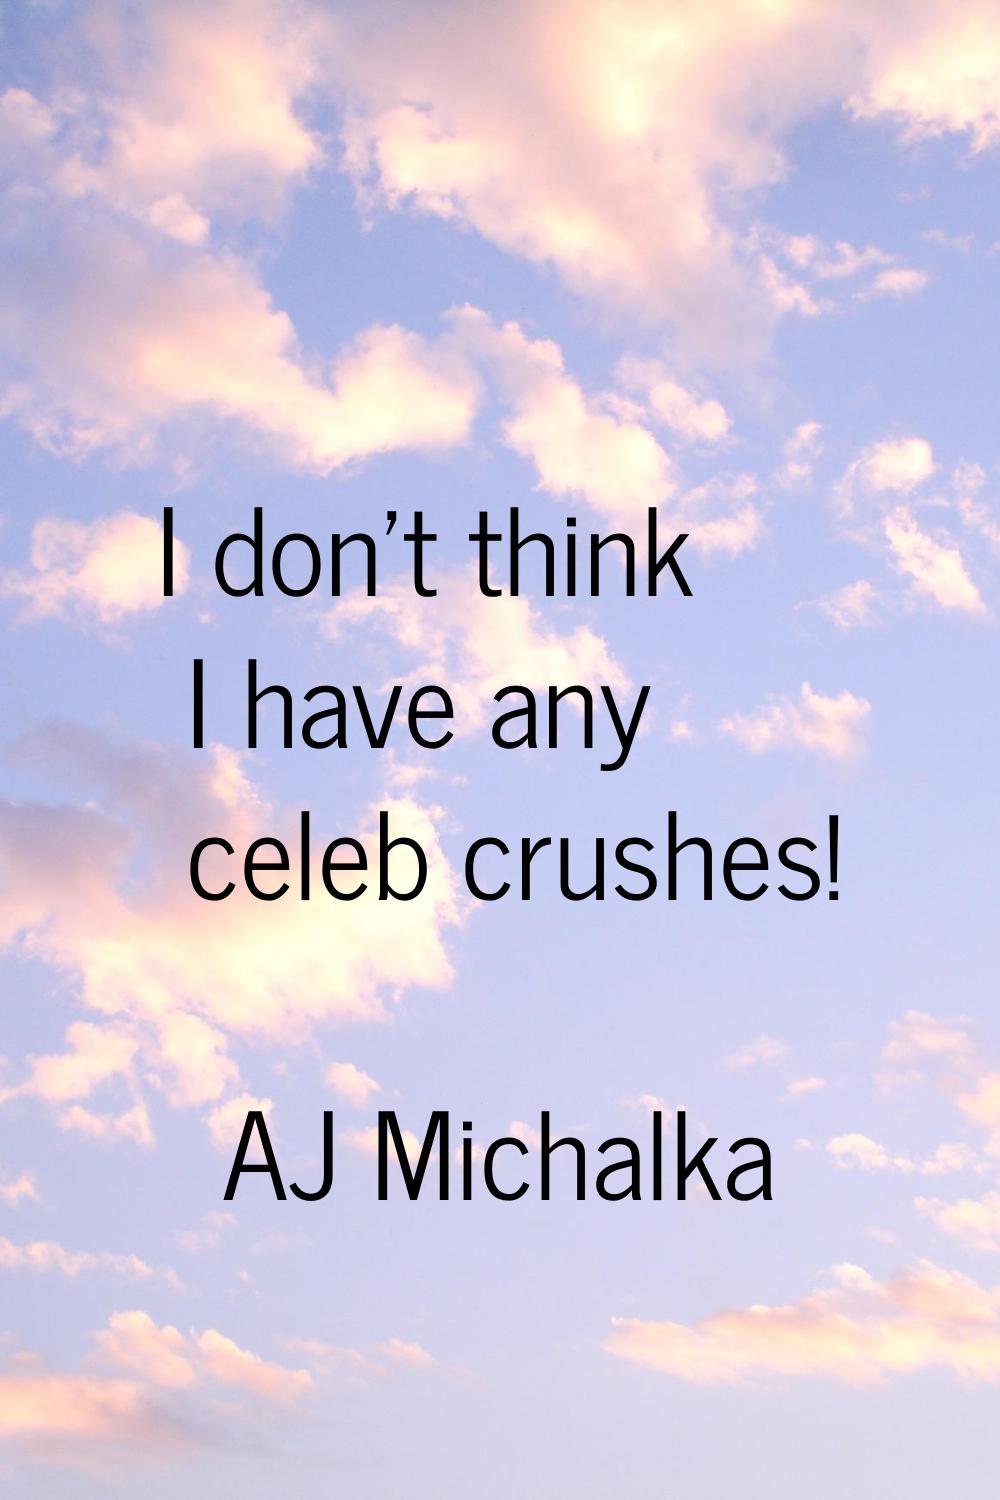 I don't think I have any celeb crushes!